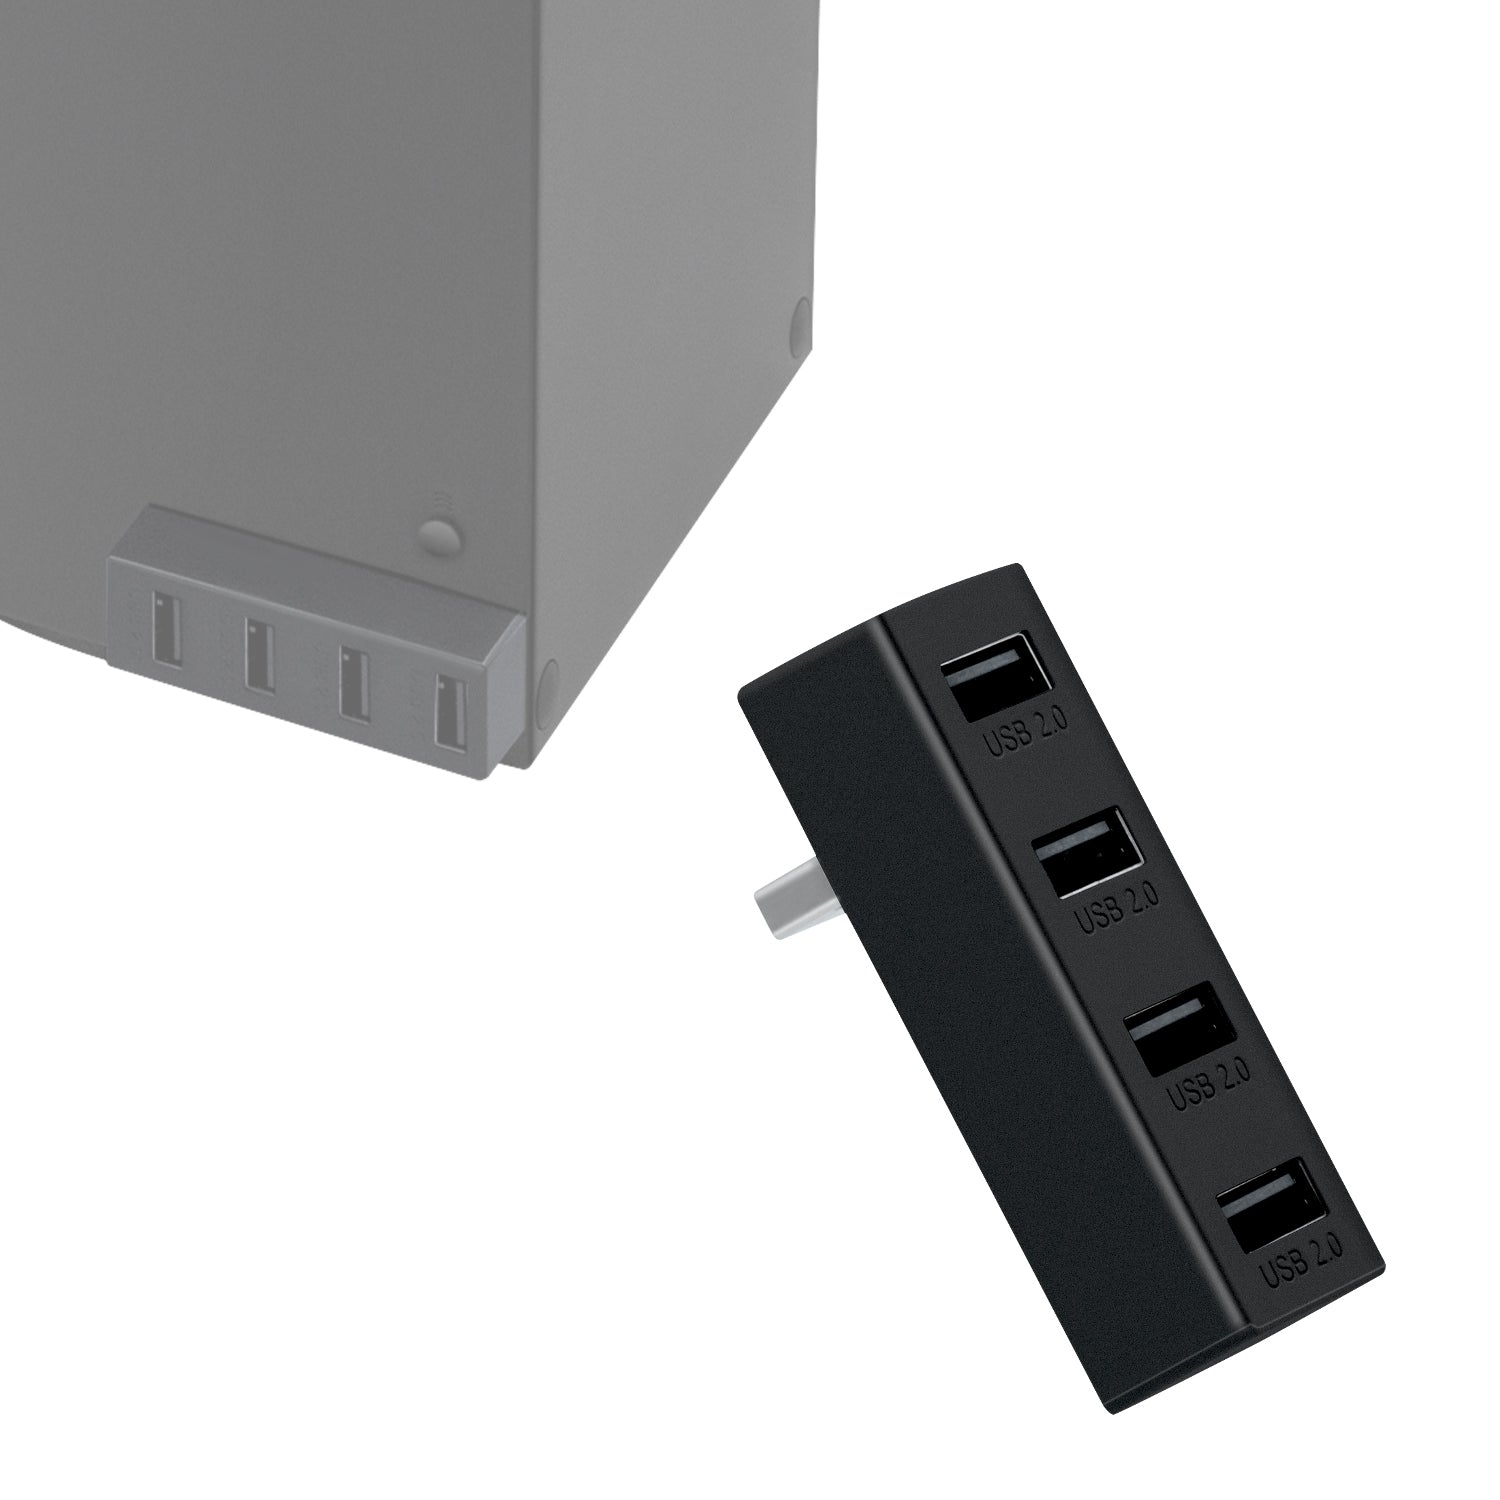 Gaming-1-to-4 USB2.0 Hub for Xbox Series X/Series S - Black (XS03)